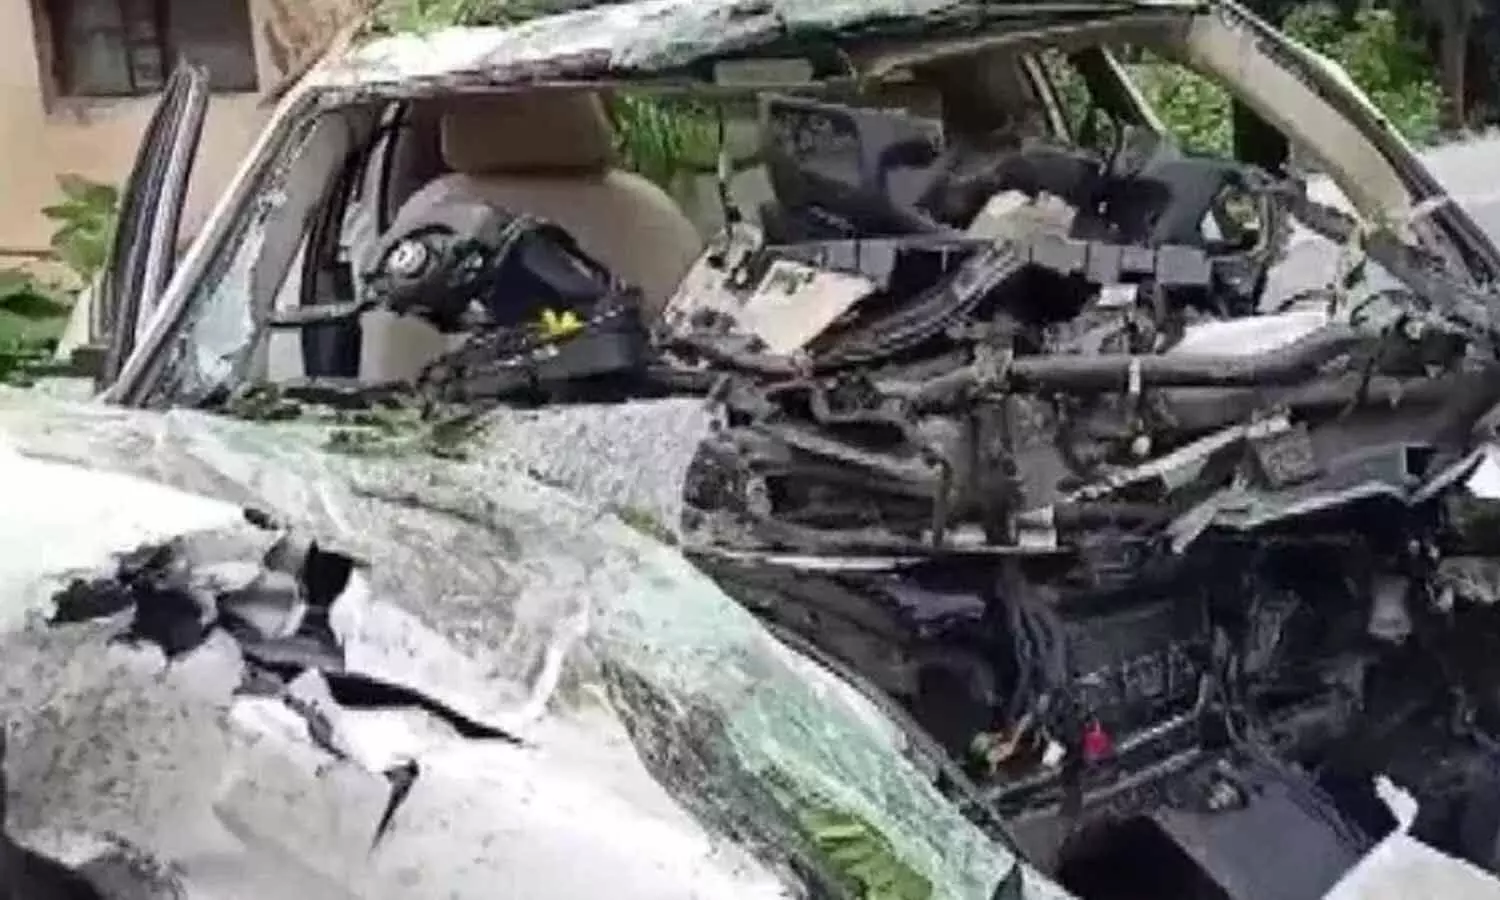 Bengaluru Audi Accident: 7 killed in car crash in Koramangala area